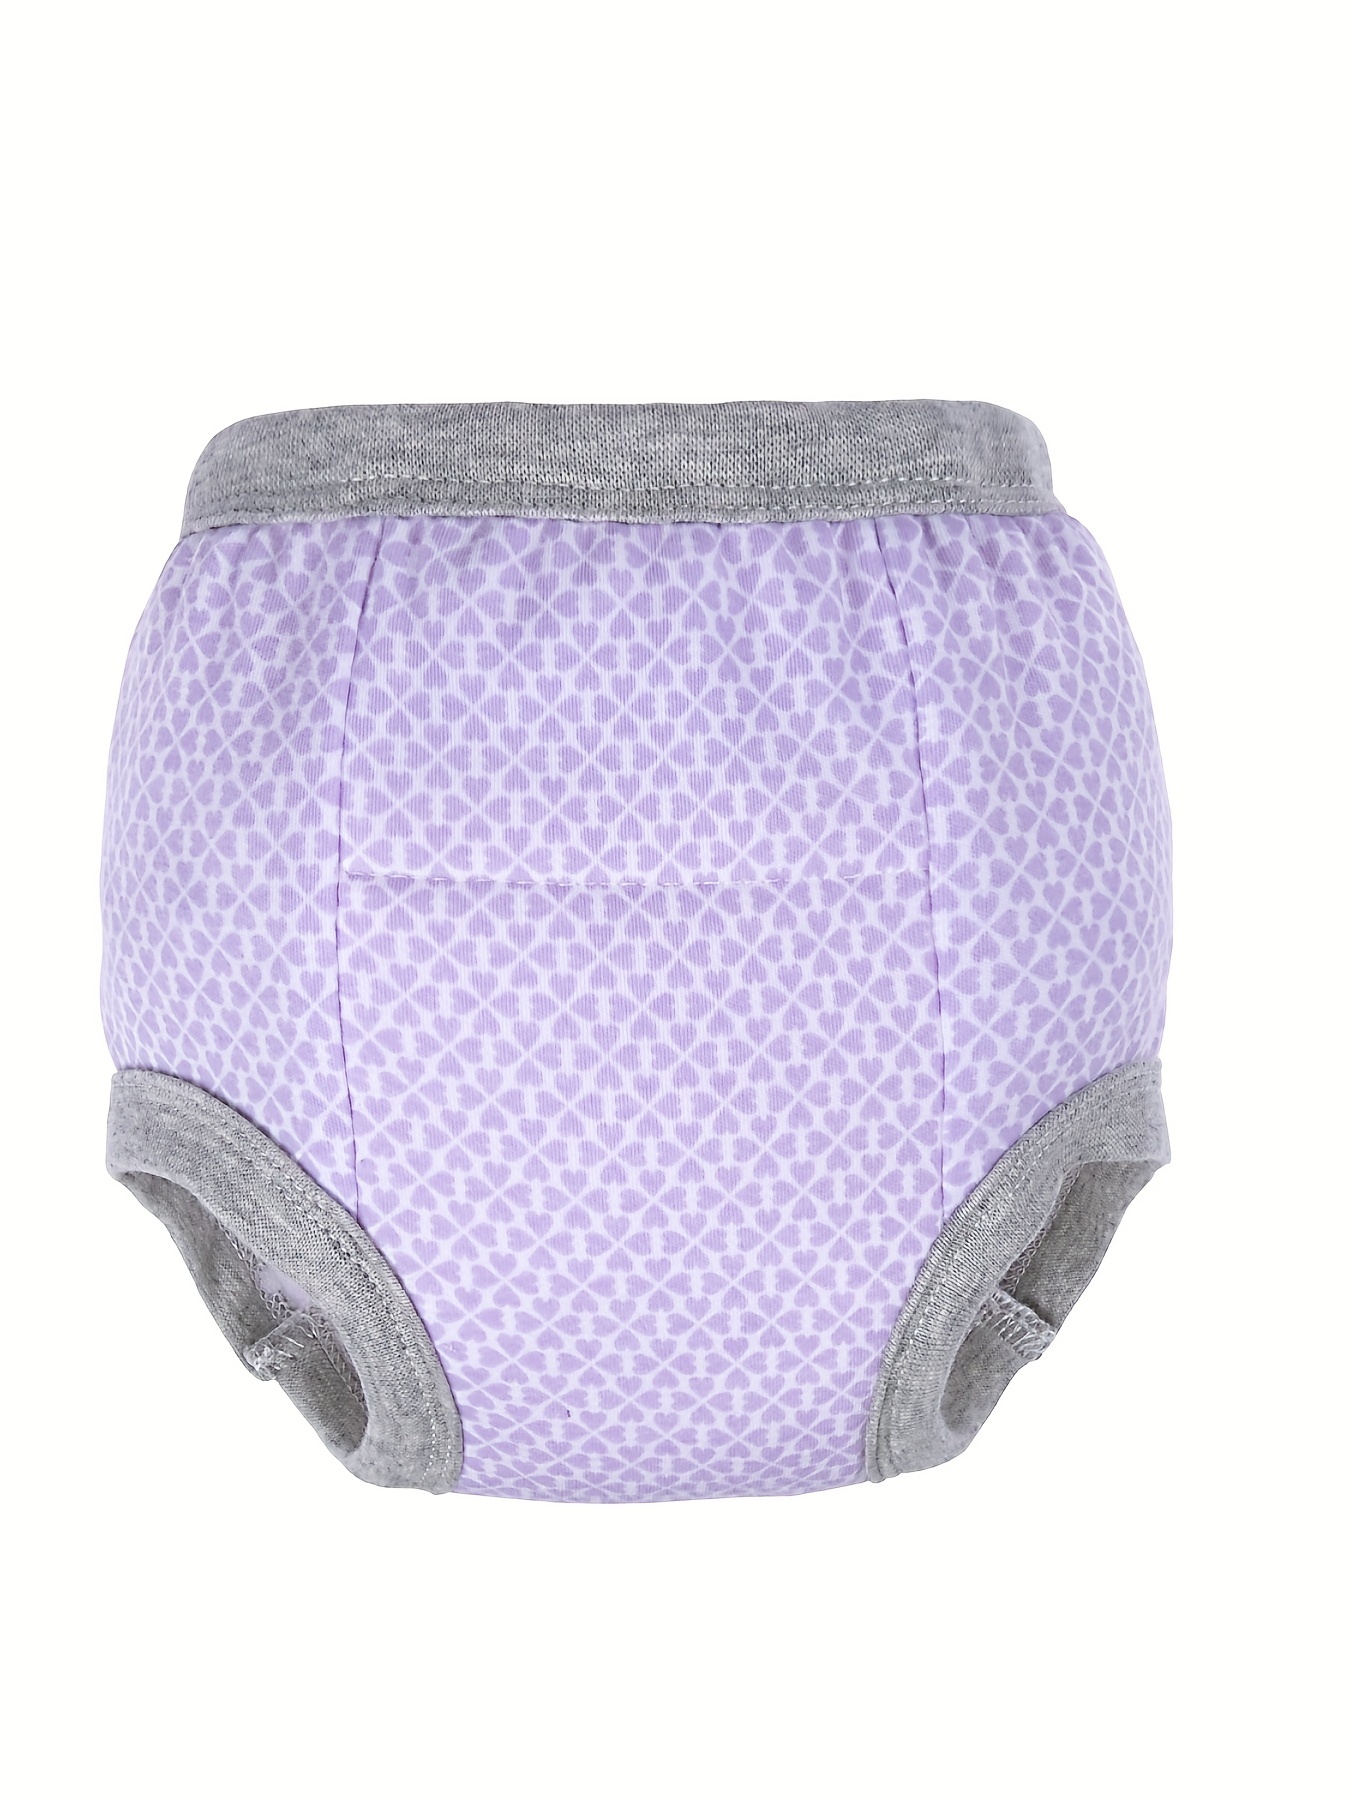 Insular 2 Pcs Training Pants Underwear 6 Layers Breathable Cotton Toddler  Potty Training Underwear 